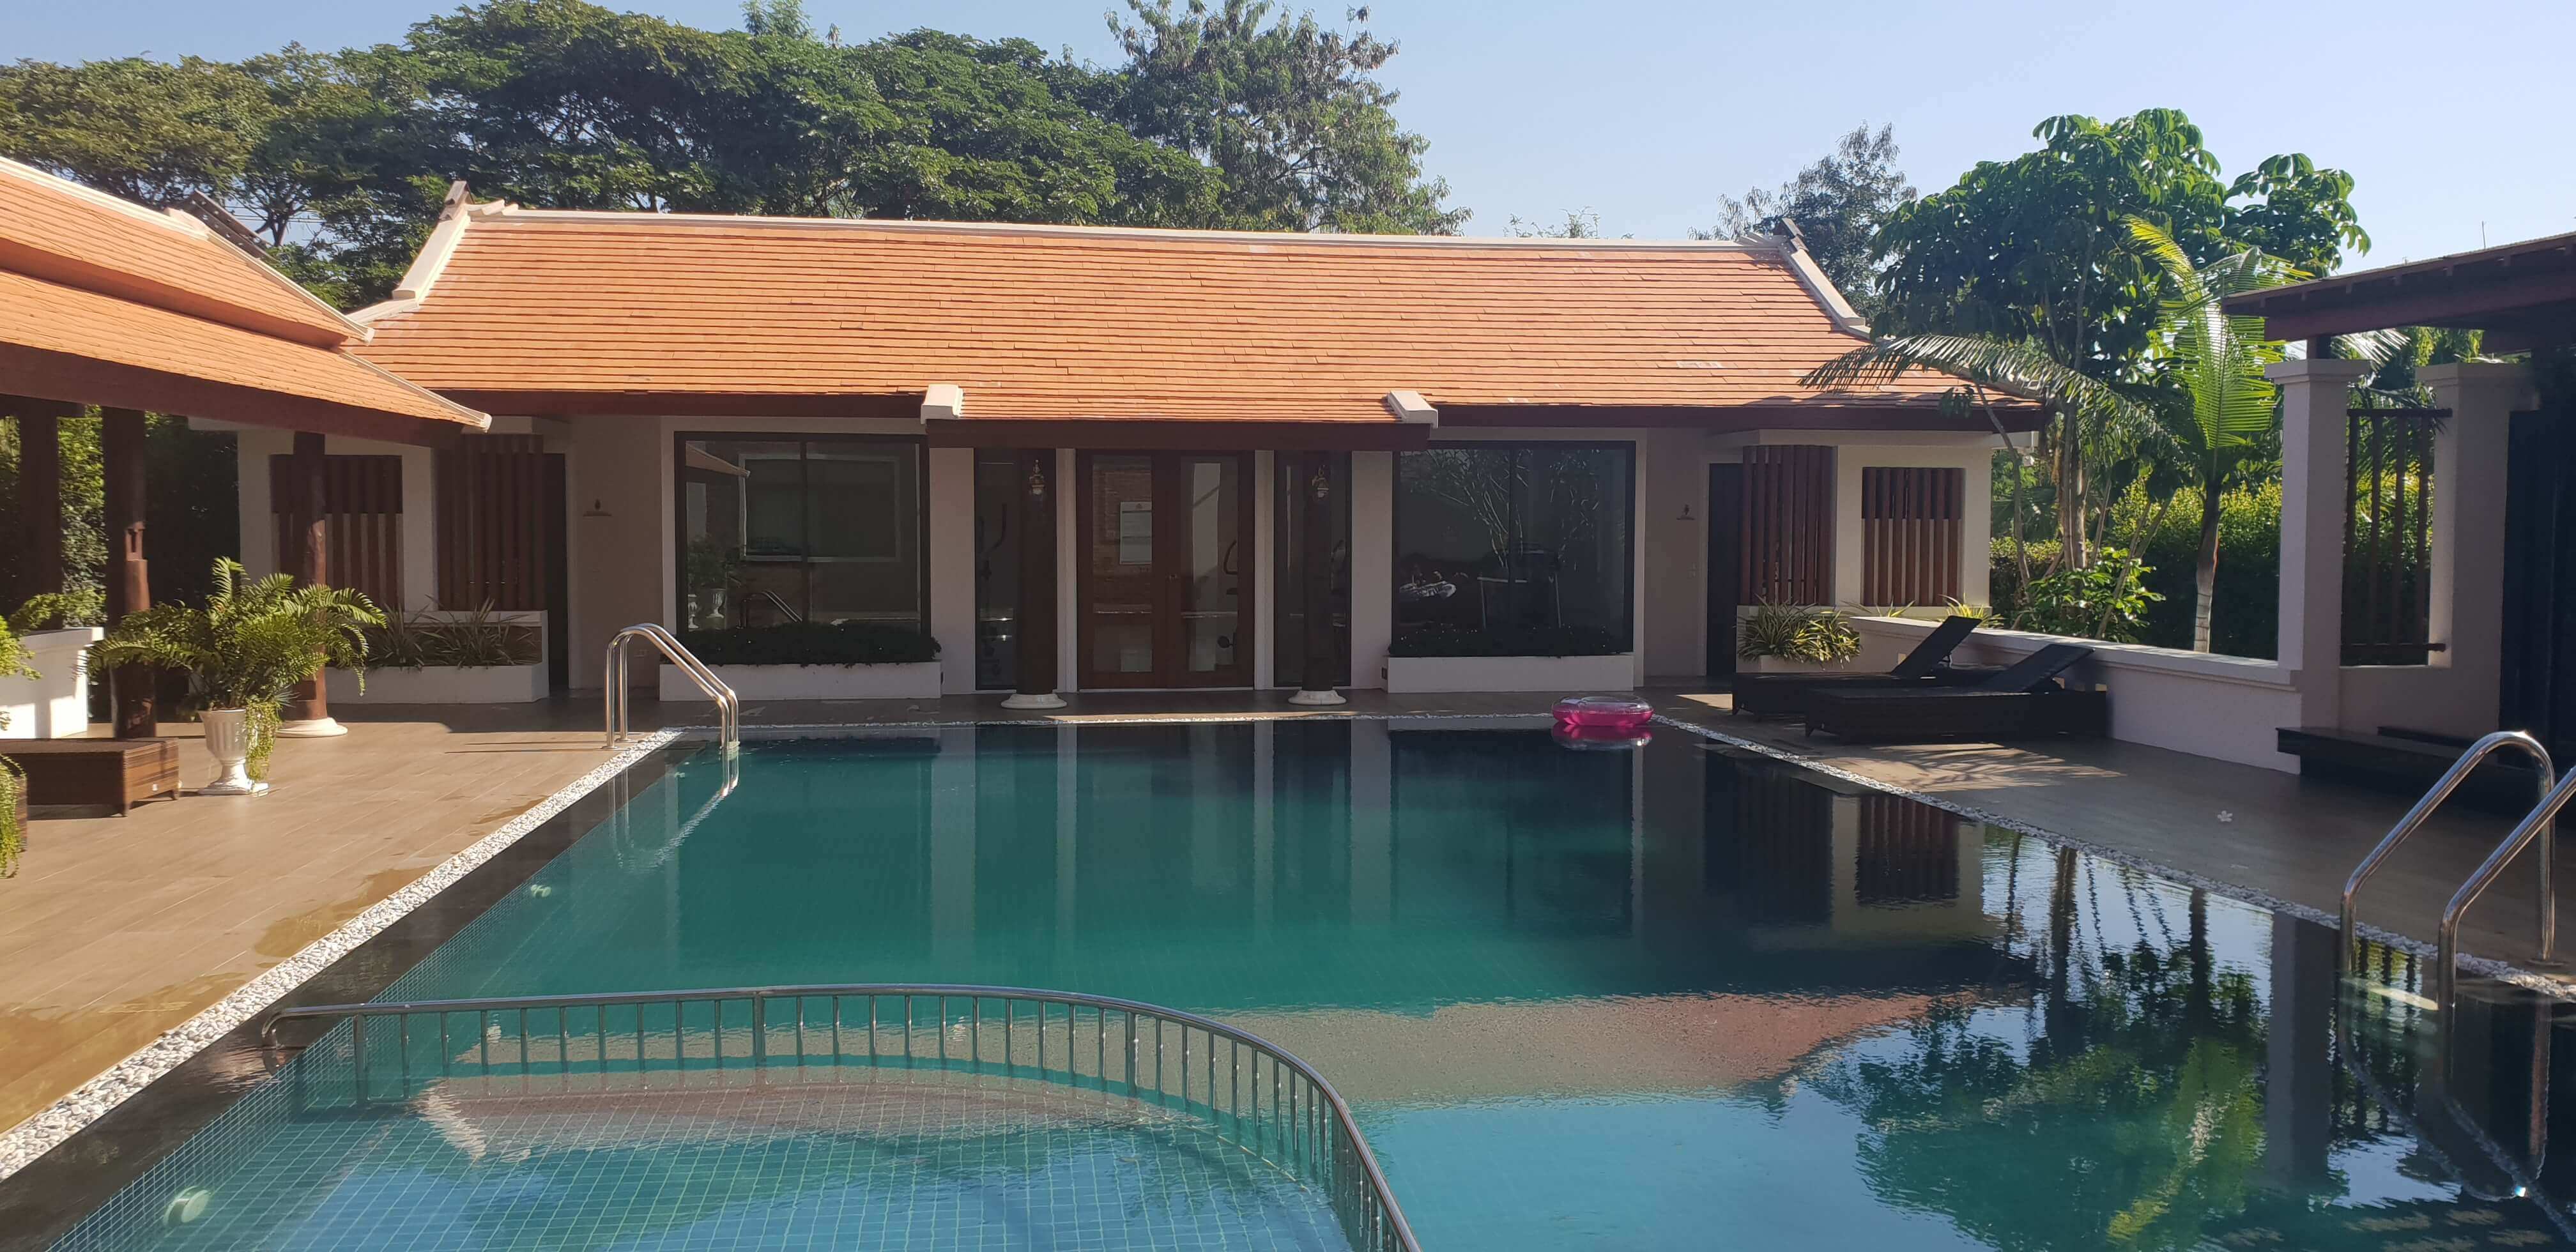 The pool area in Content Villa, Chiang Mai